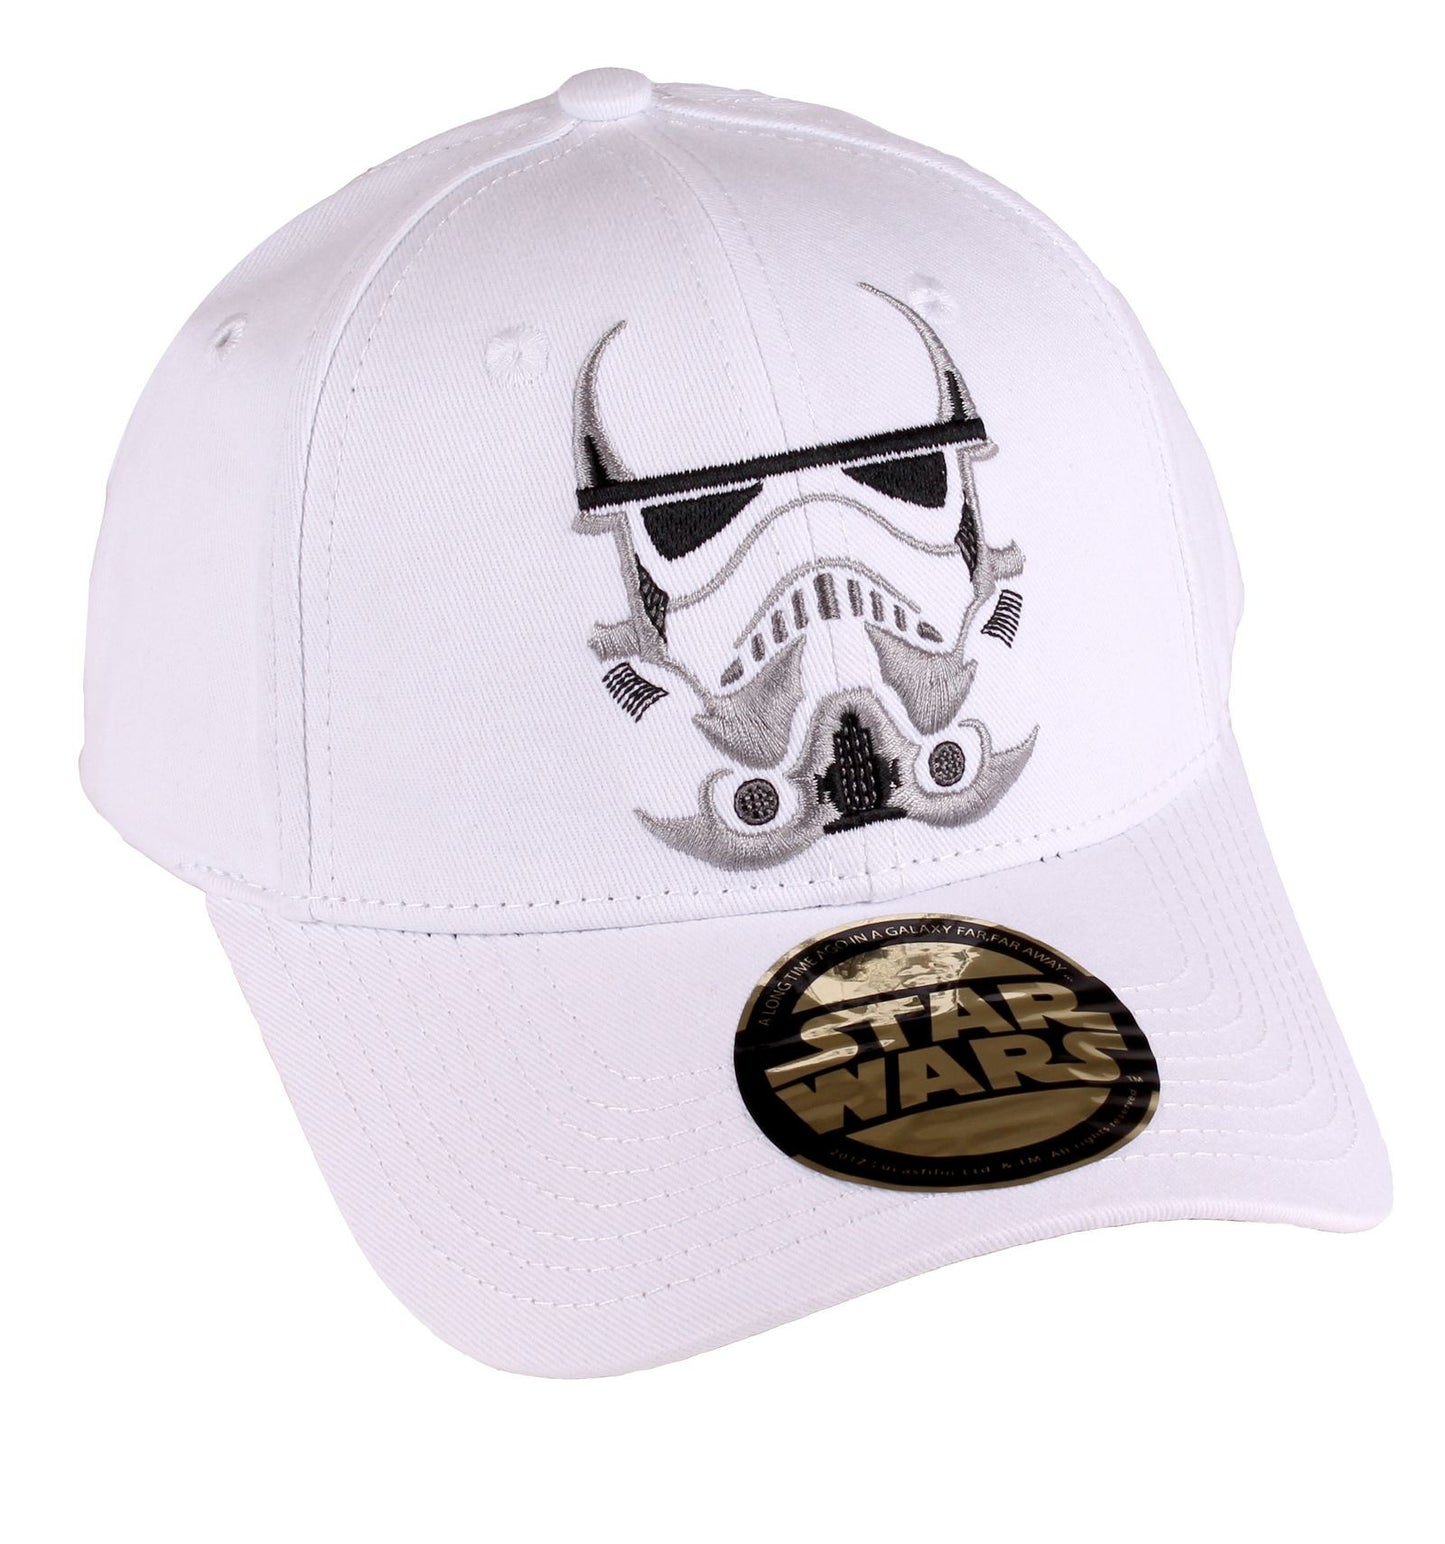 Star Wars Cap - Stormtrooper